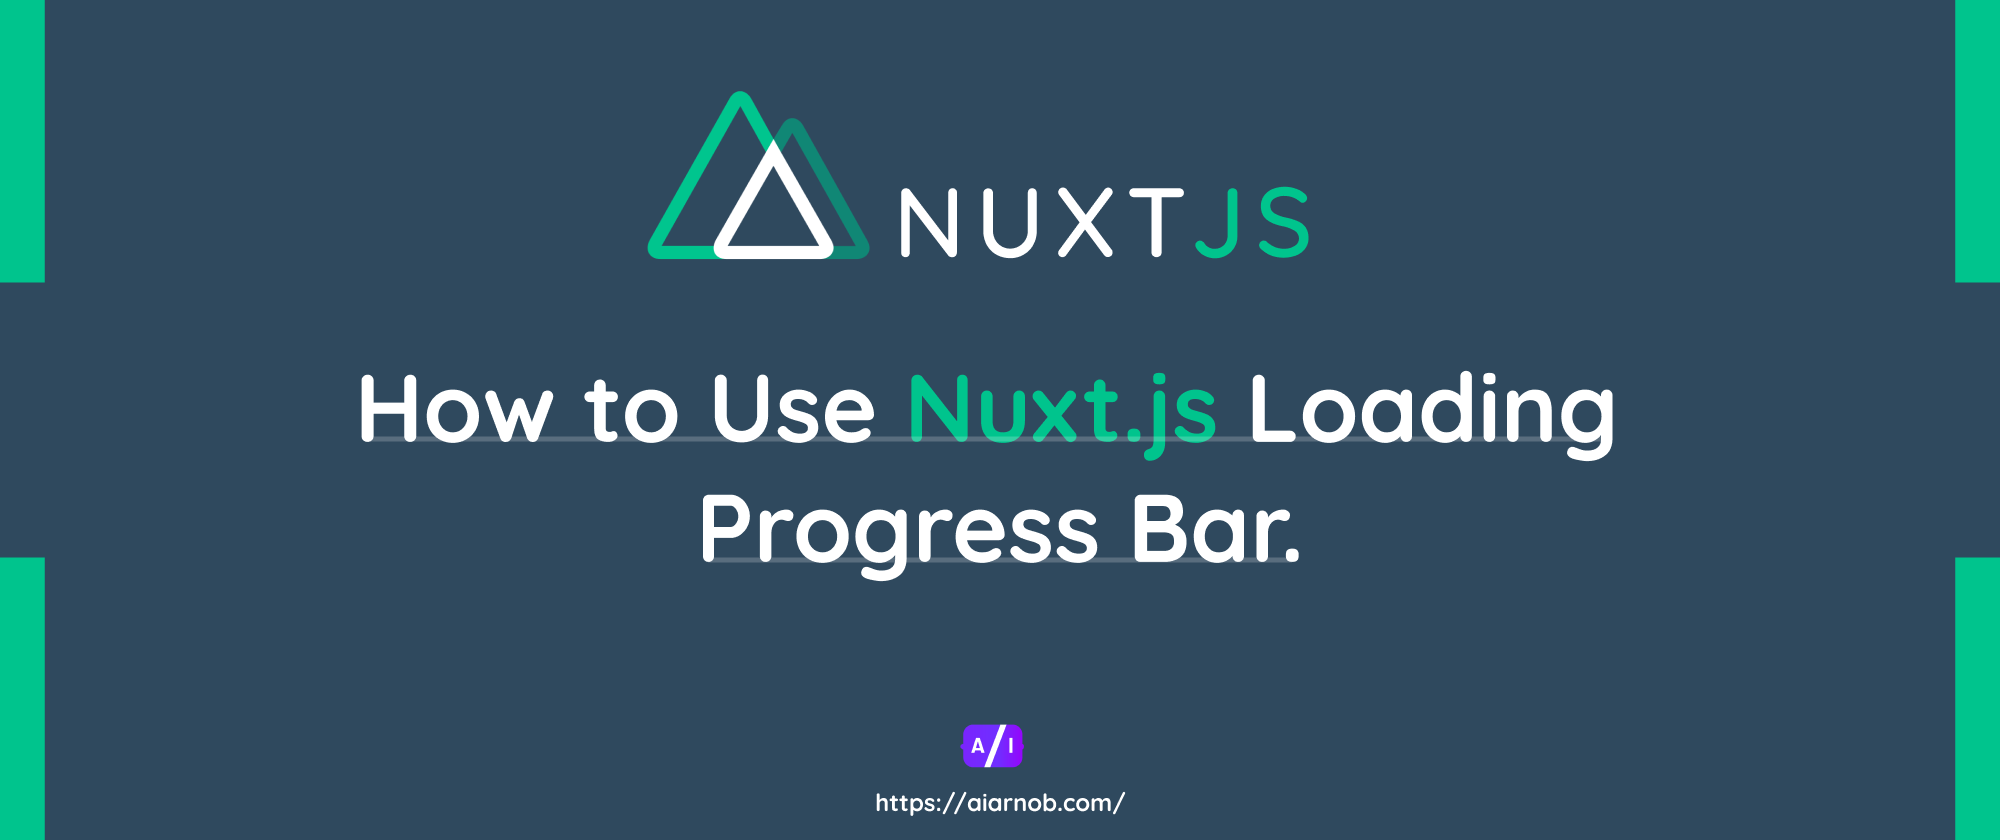 How to Use Nuxt.js Loading Progress Bar